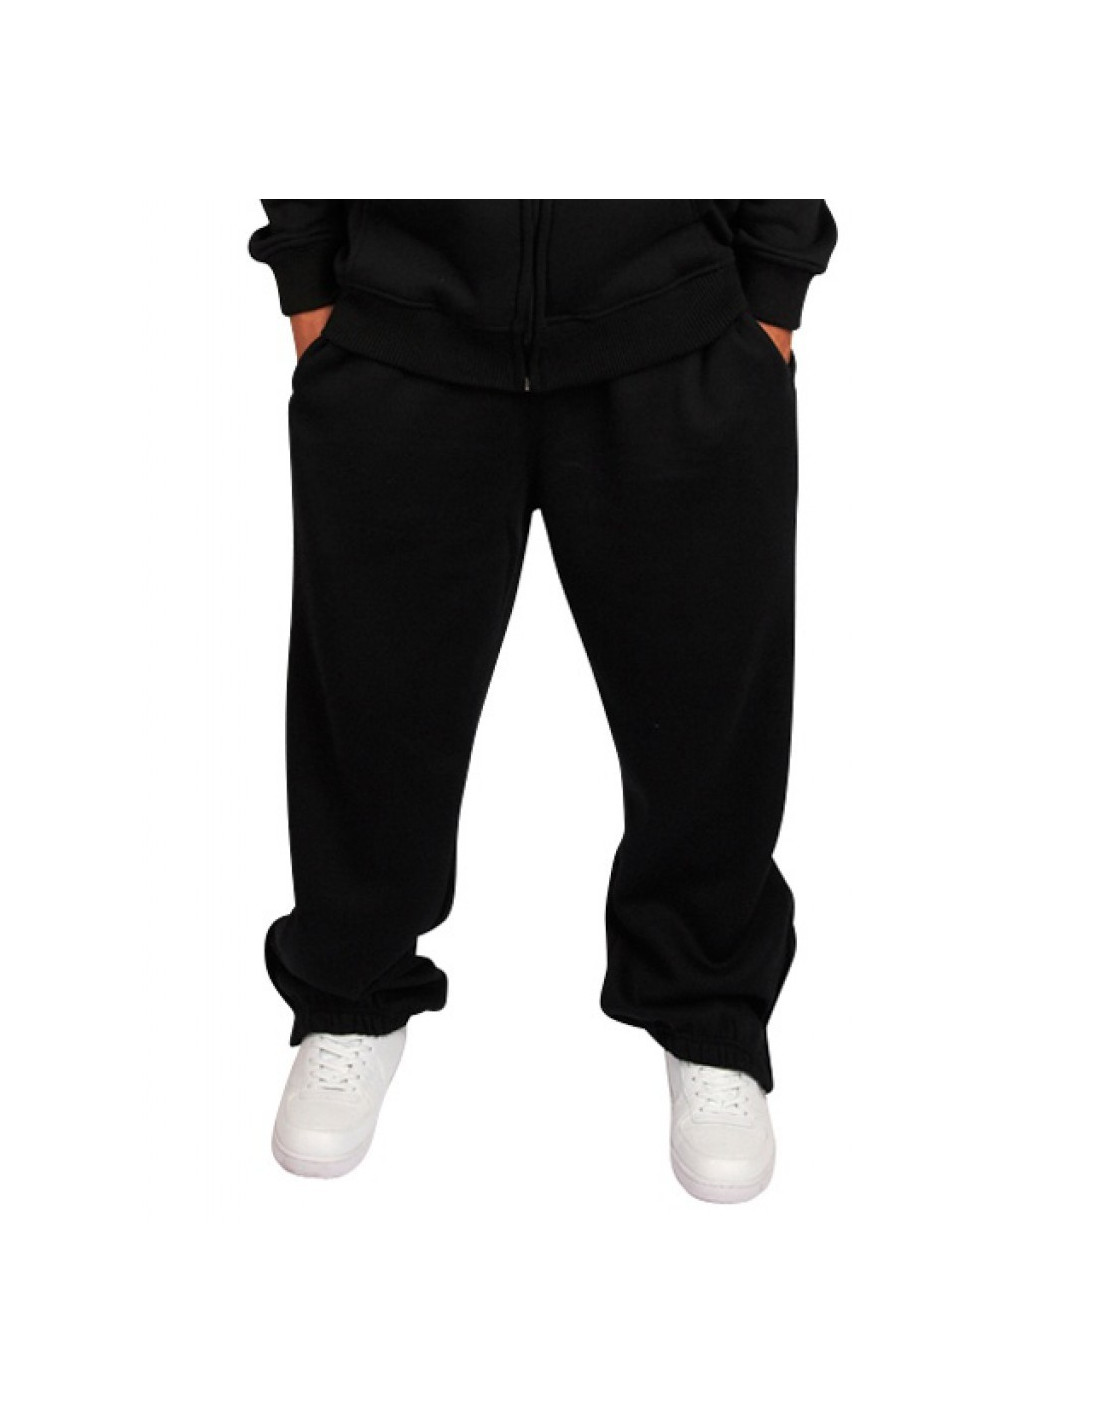 Townz Black Sweat Pants - PS-037